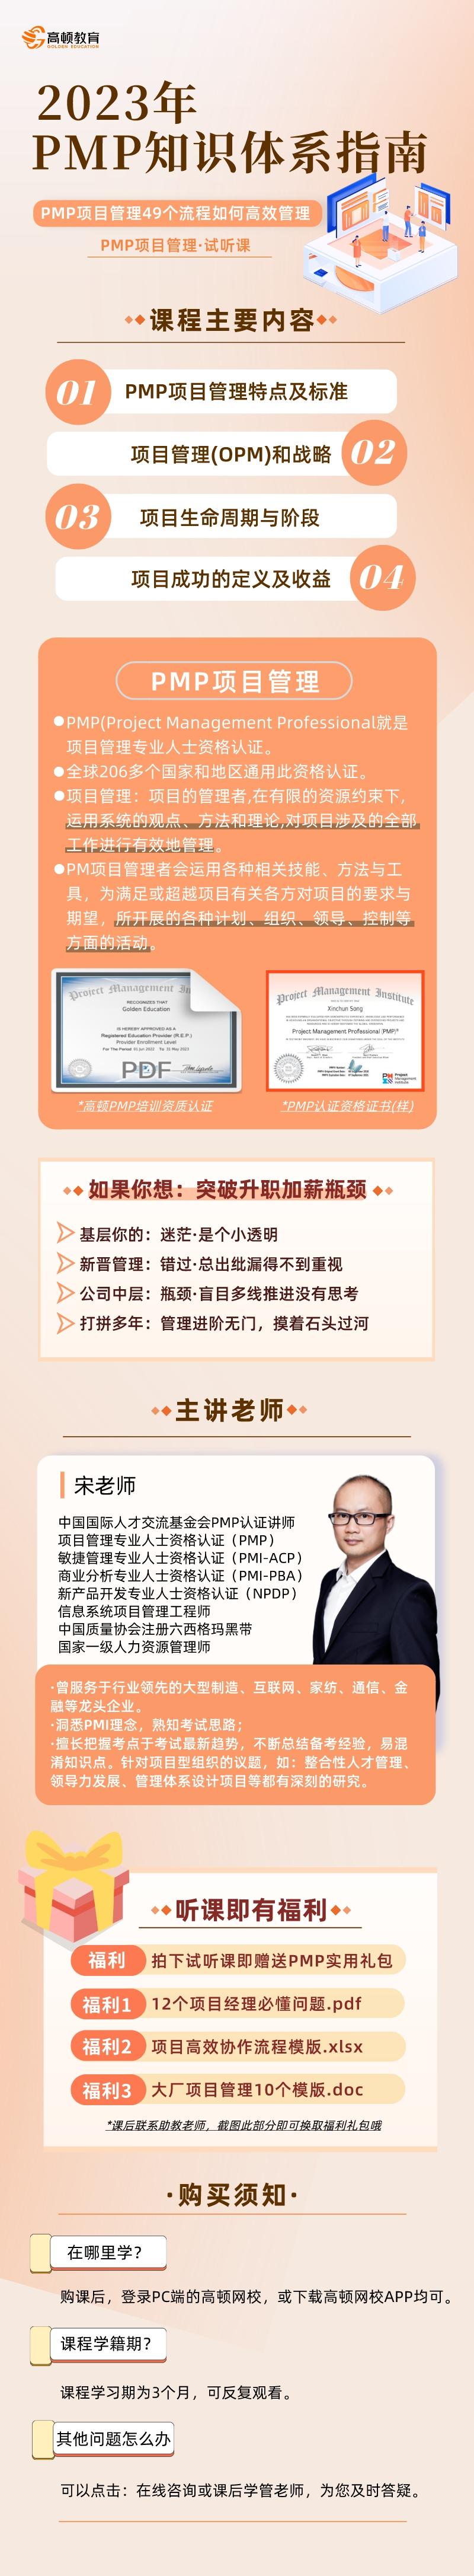 https://simg01.gaodunwangxiao.com/uploadfiles/product-center/202301/14/46359_20230114185753.jpeg